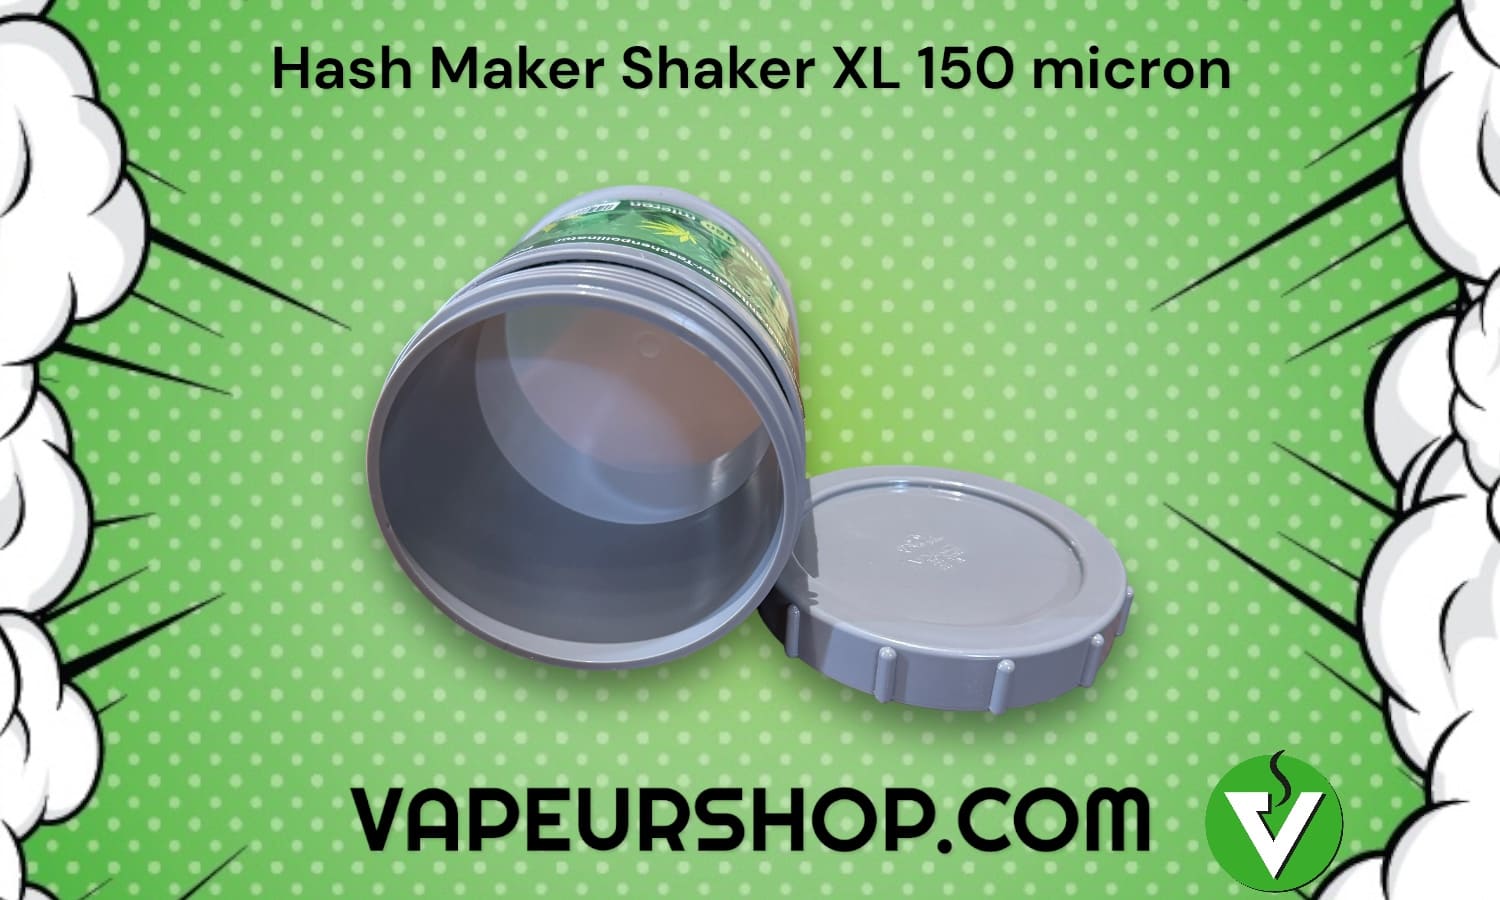 Hash Maker Shaker XL 150 micron